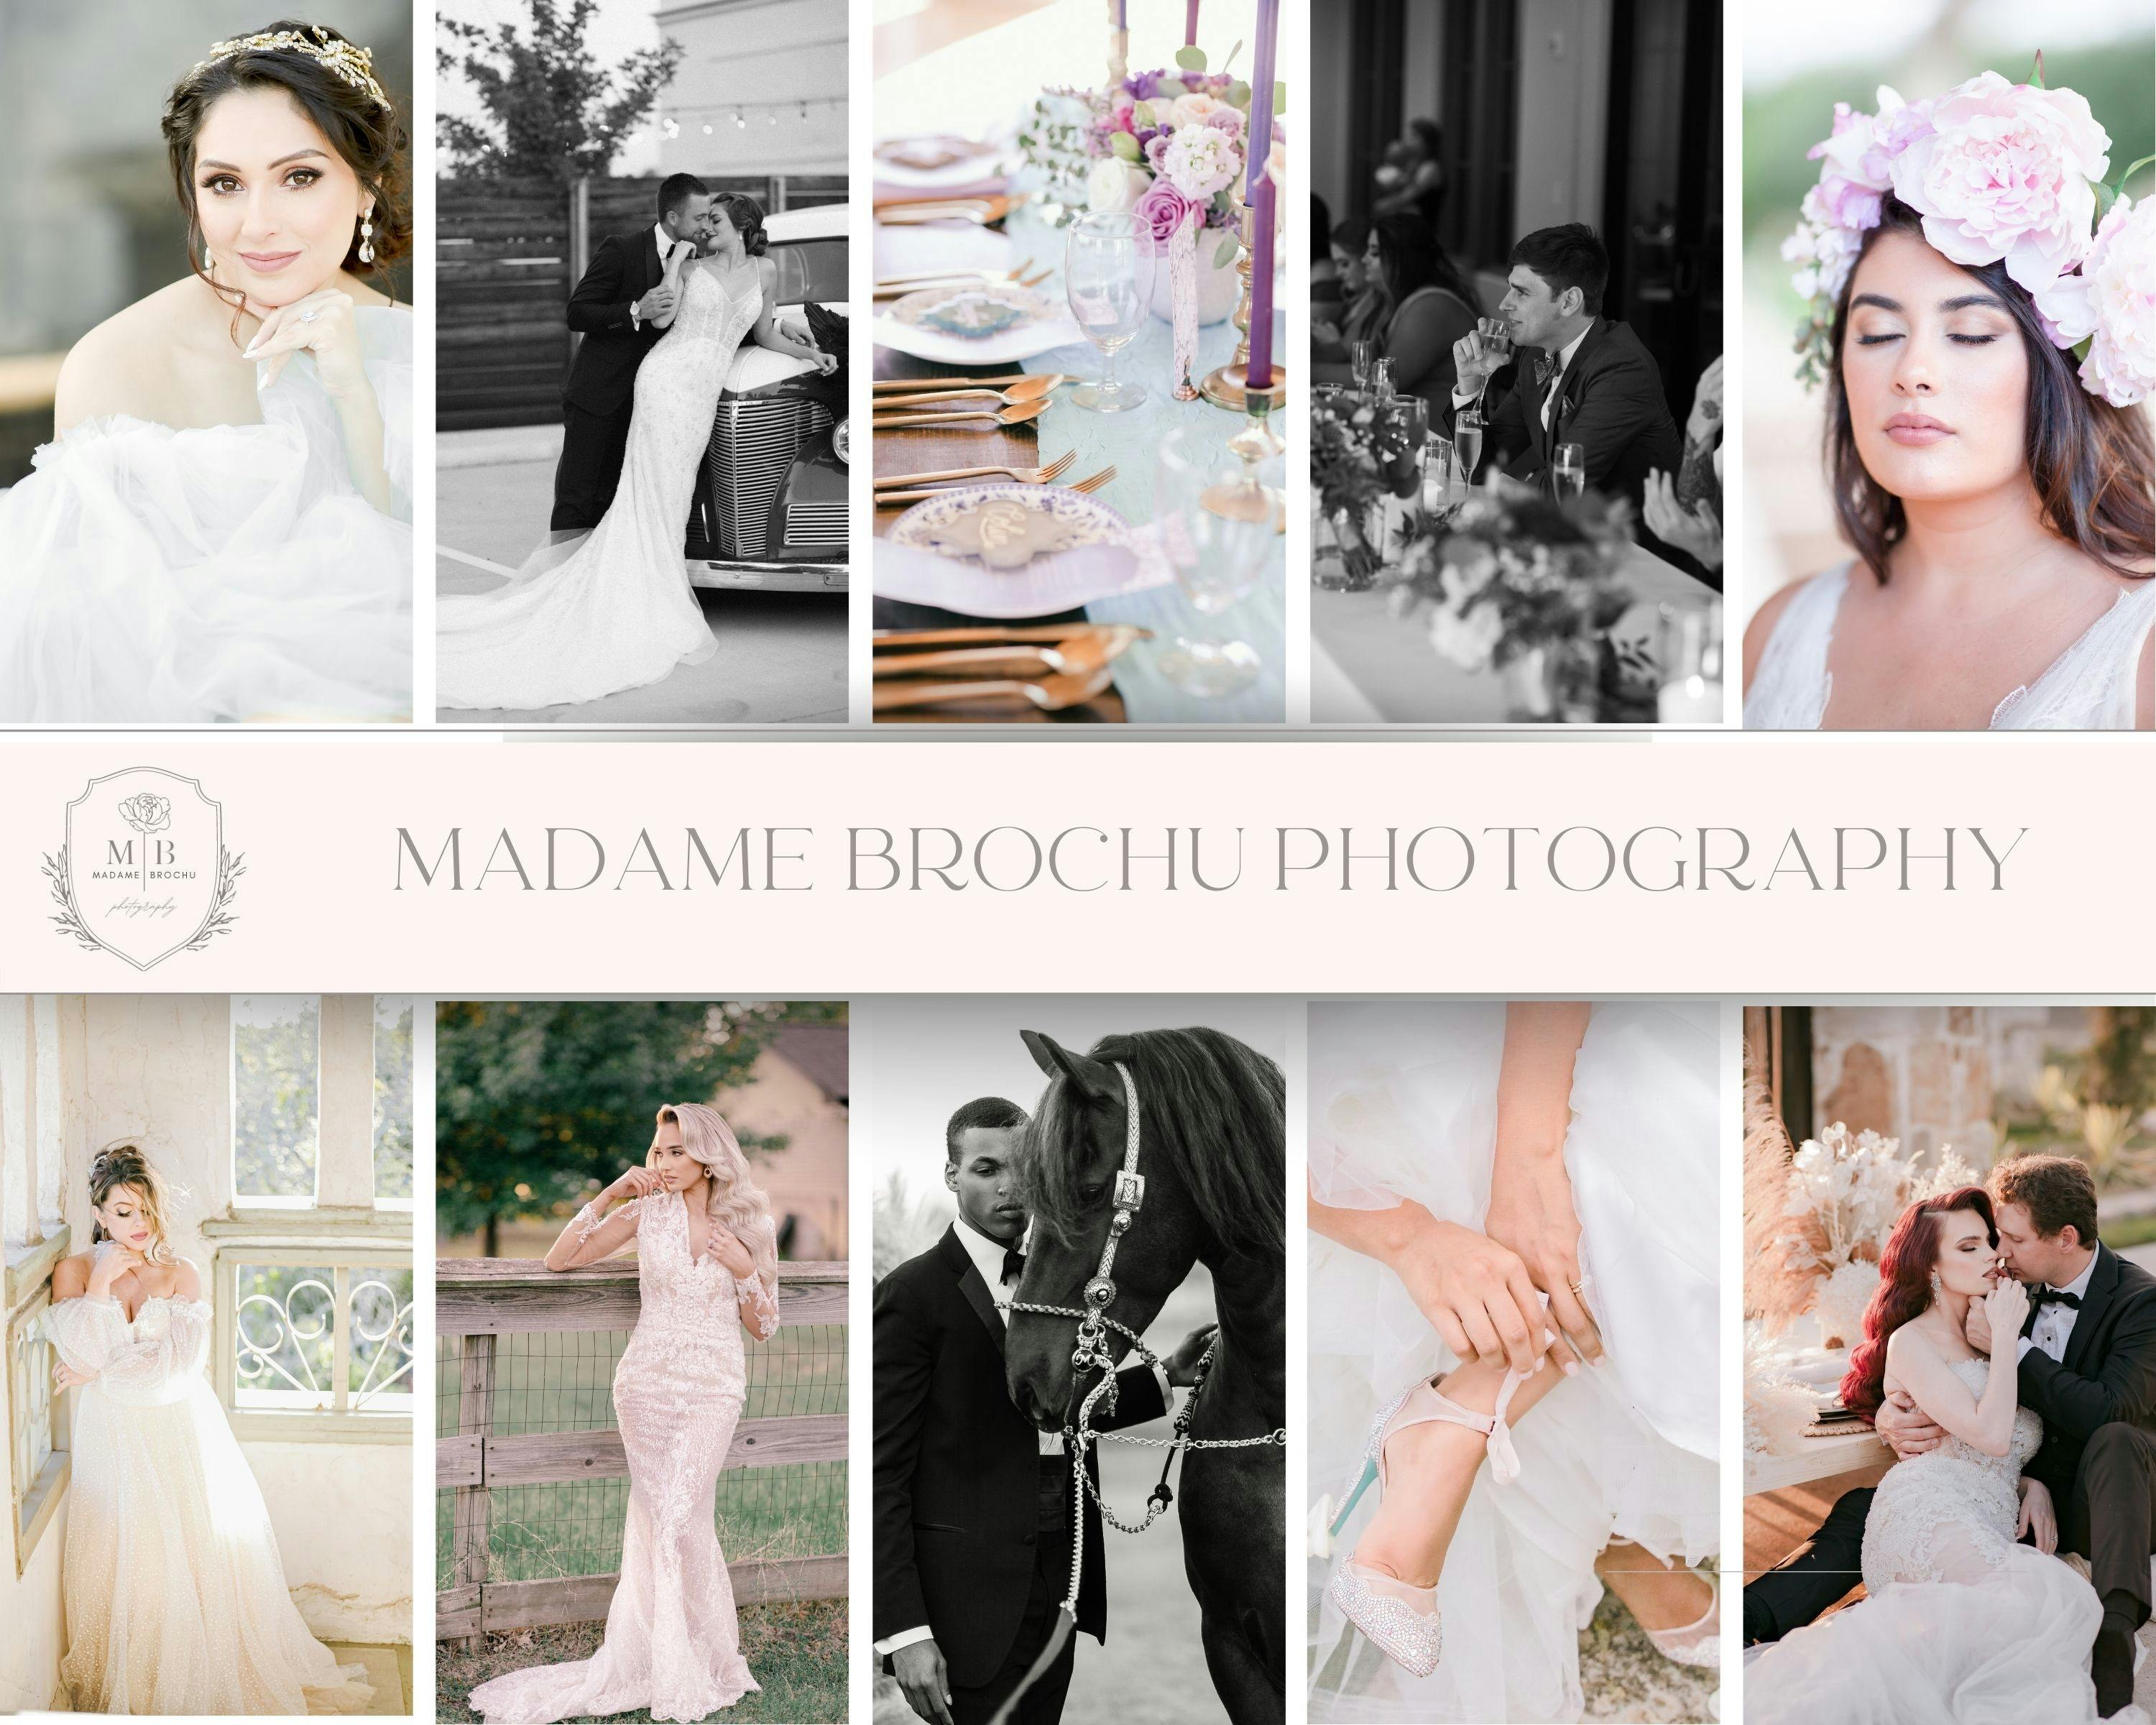 Madame Brochu Photography free consultation 